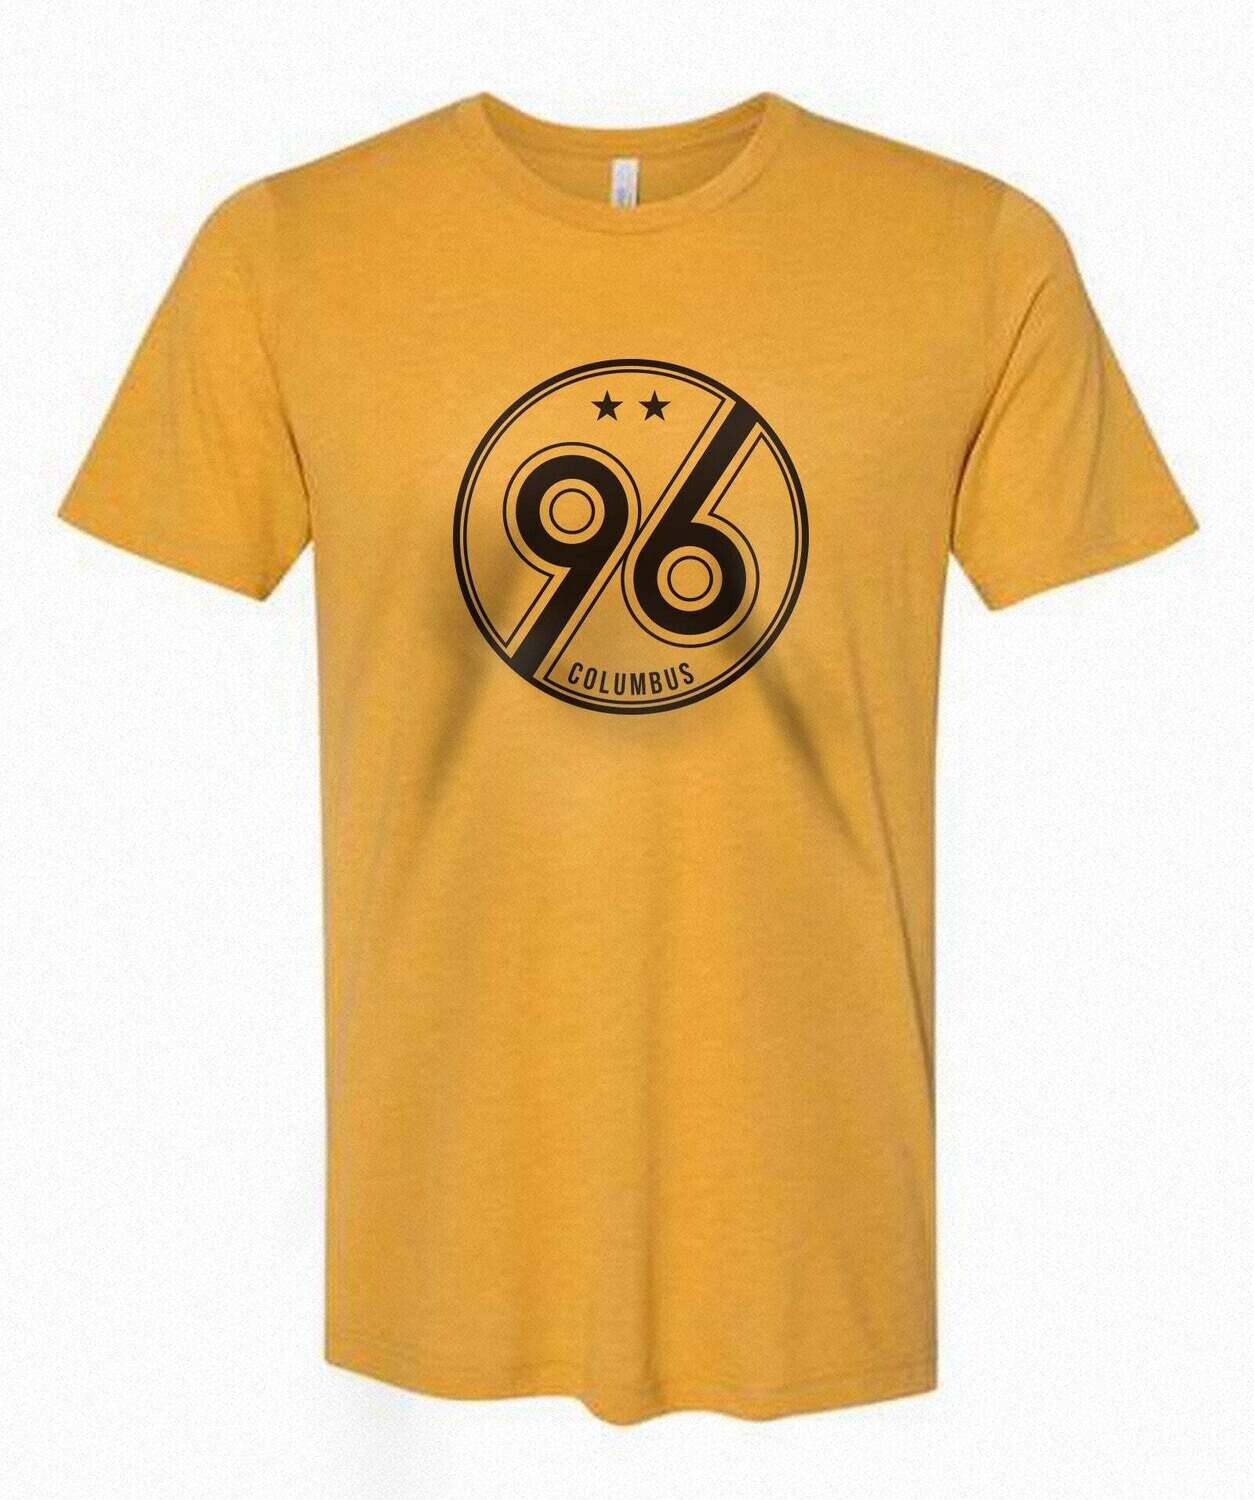 Columbus 96 Soccer T-shirt